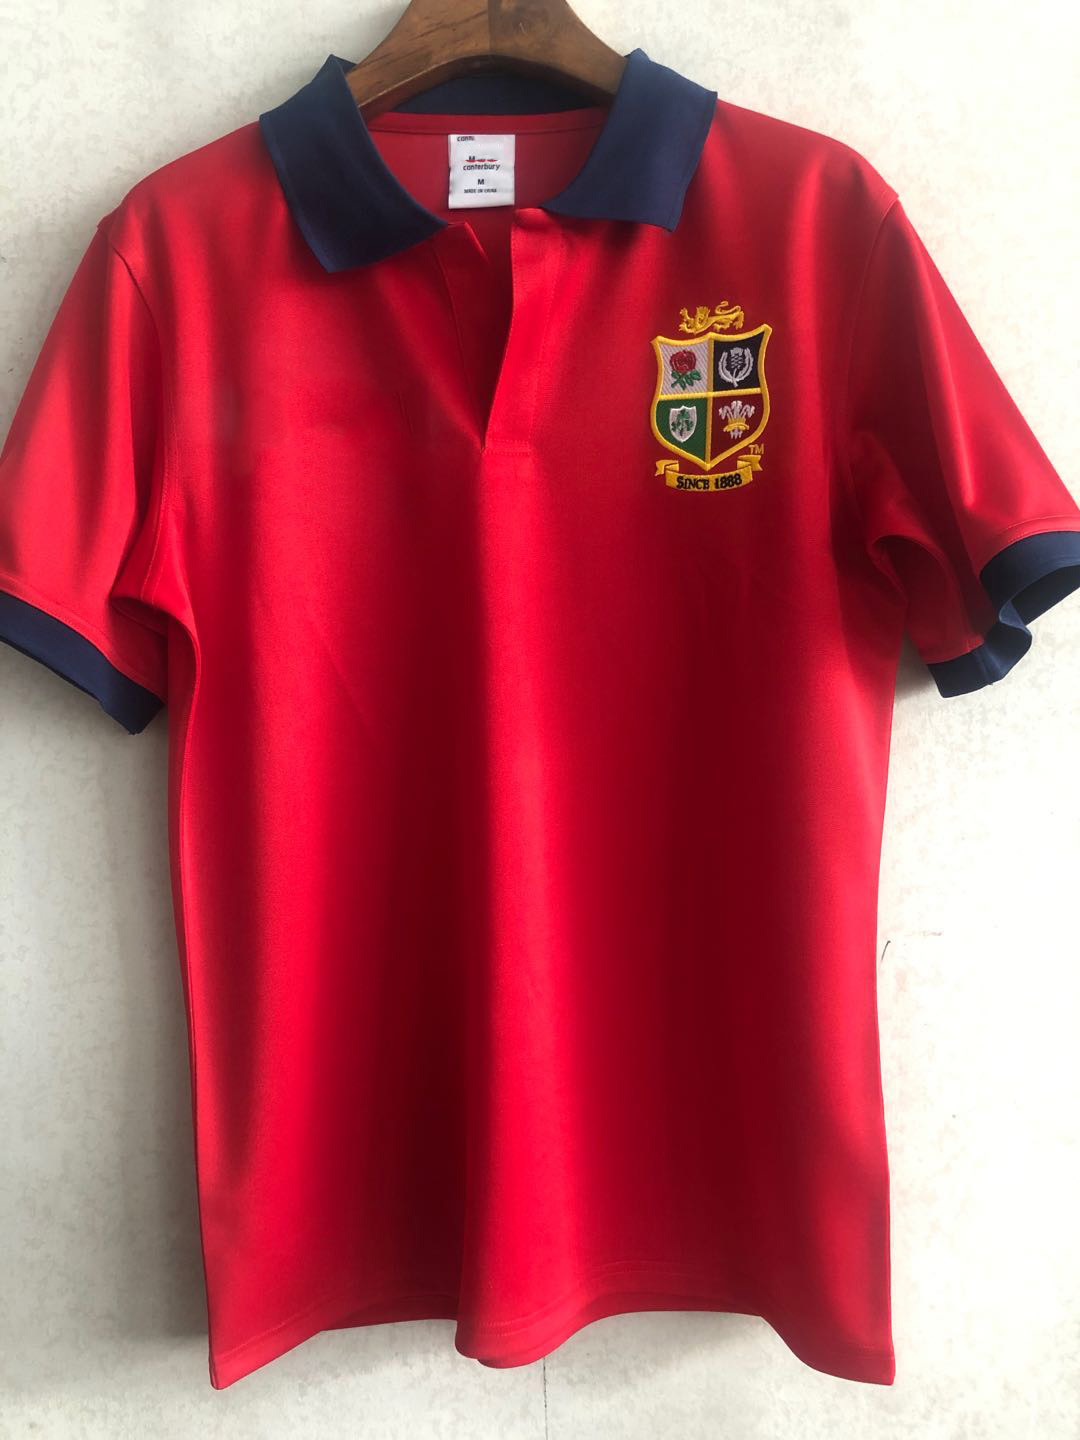 2020-21 New rugby jersey shirt S-5XL